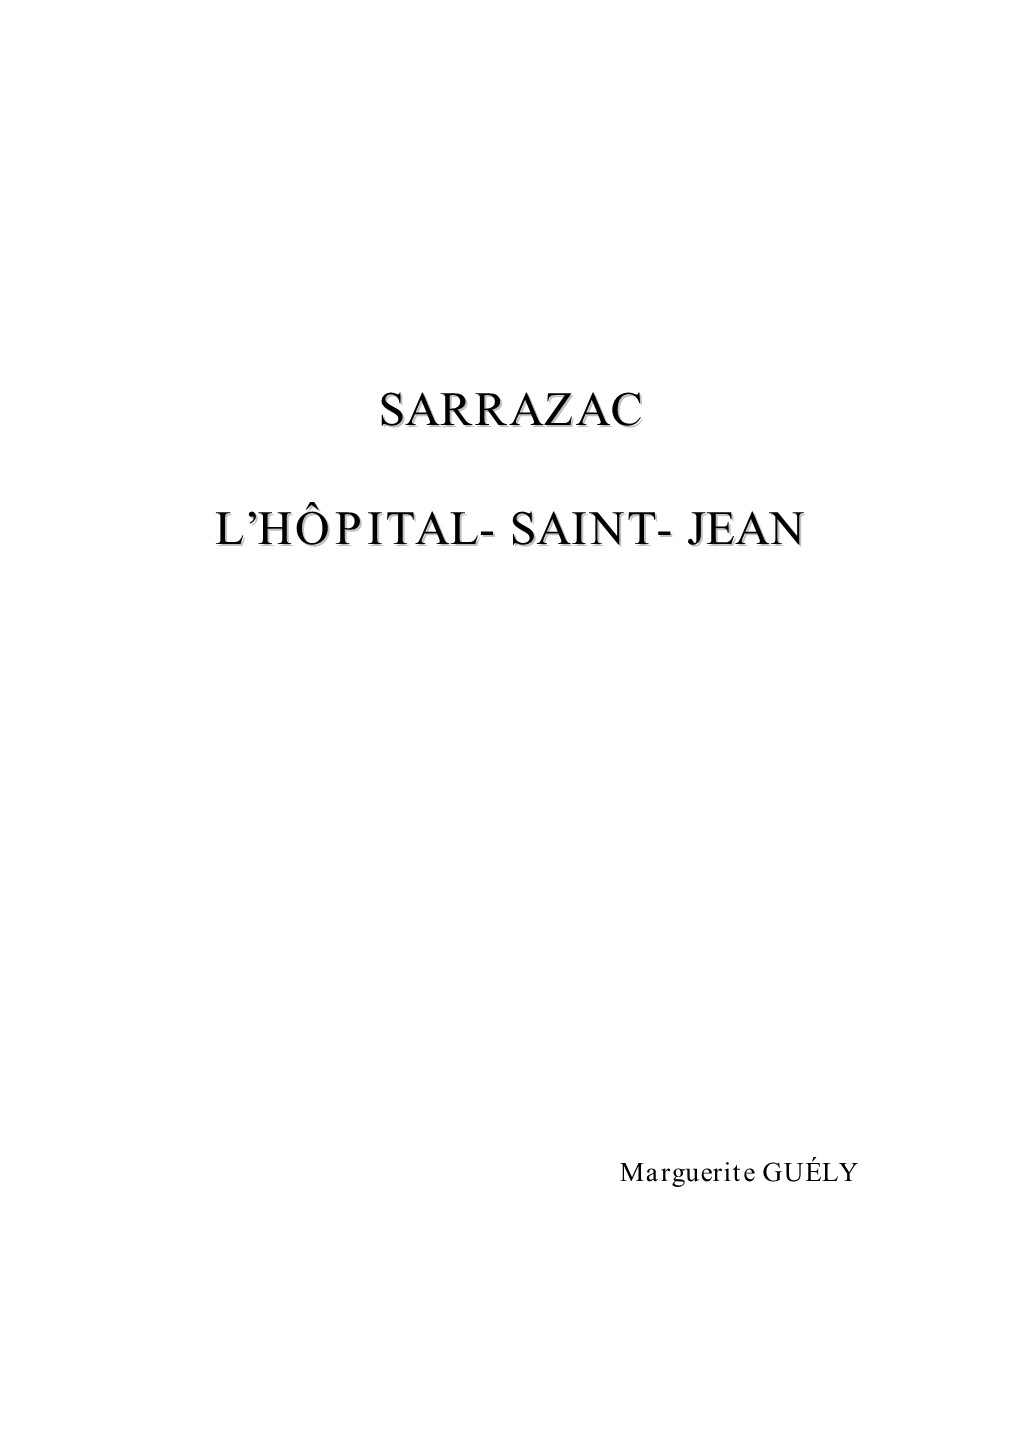 Sarrazac L'hôpital- Saint- Jean